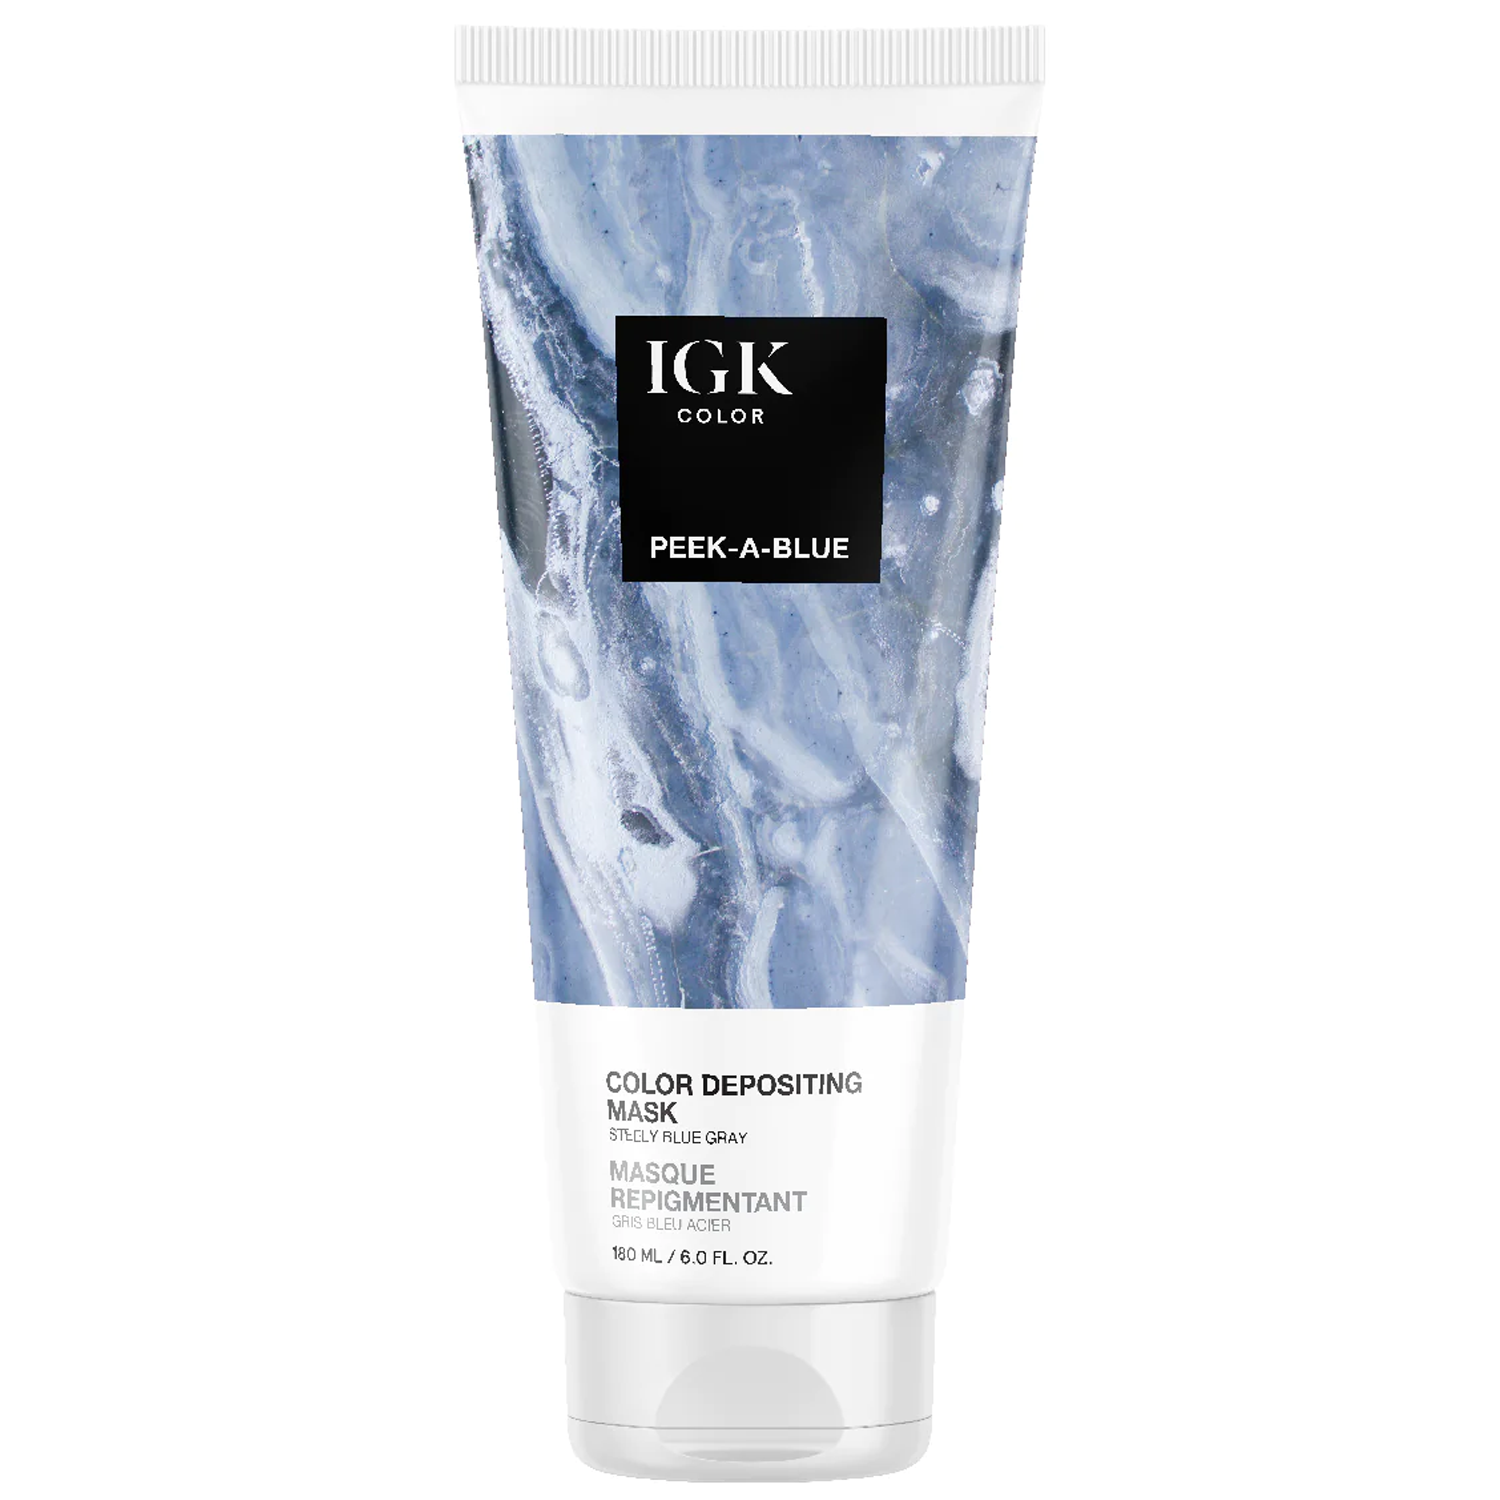 IGK Hair Color Depositing Mask, Peek-A-Blue